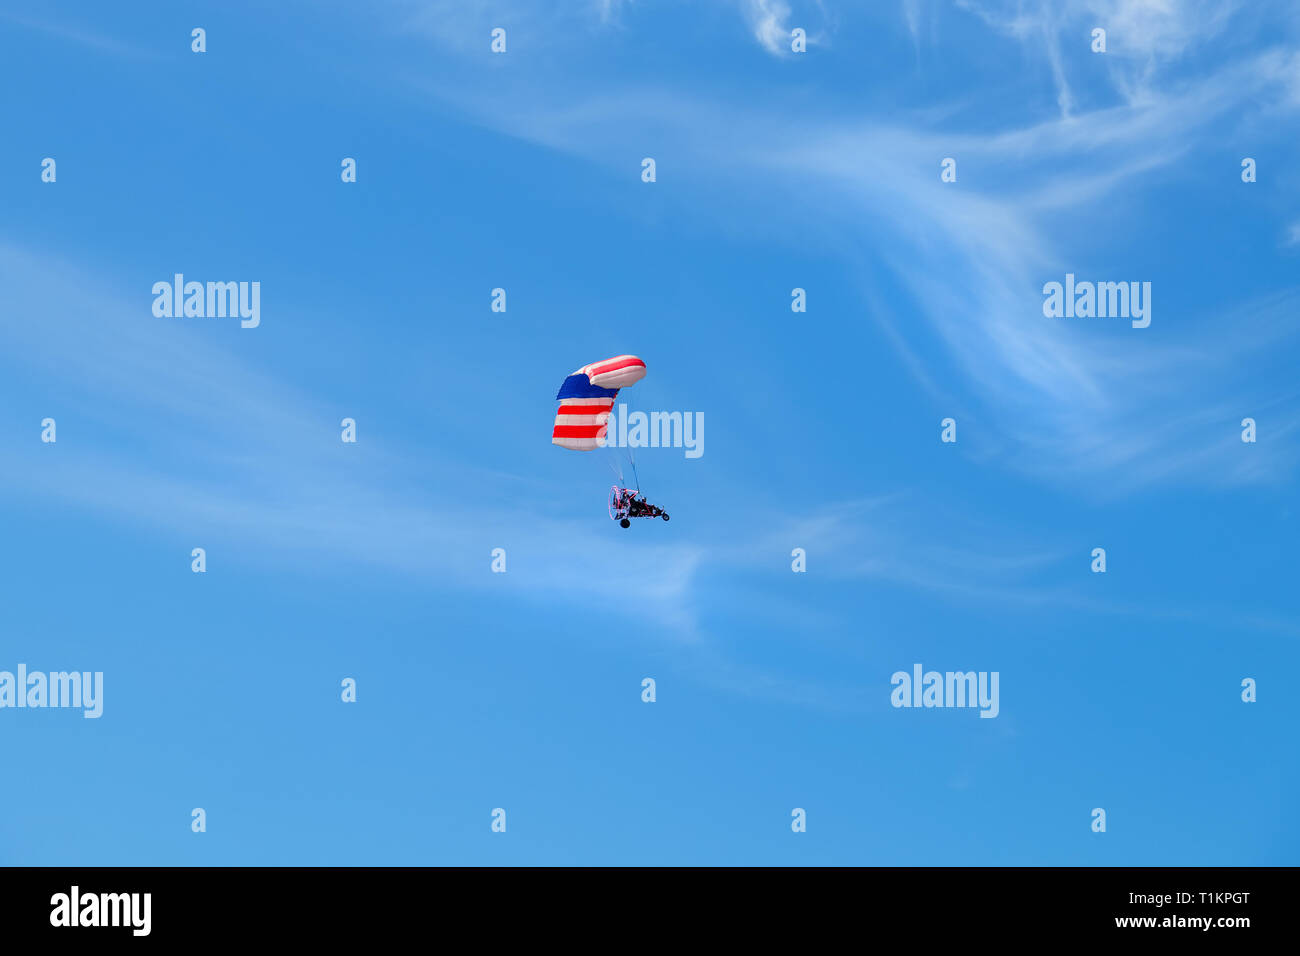 Pilot hang gliding on a blue sky  background. Stock Photo